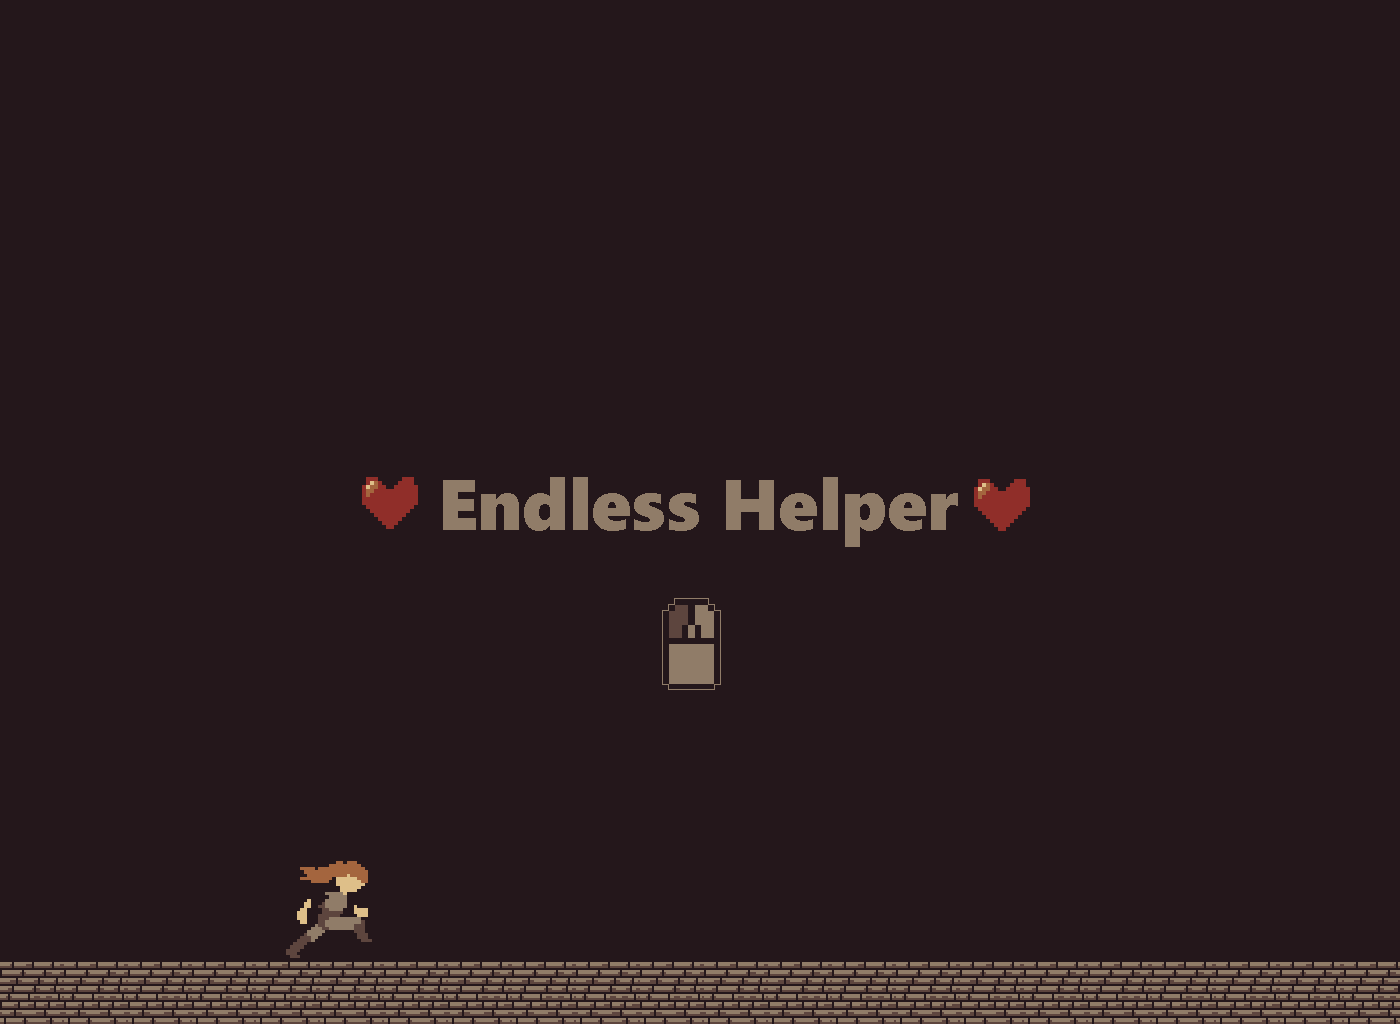 Endless helper